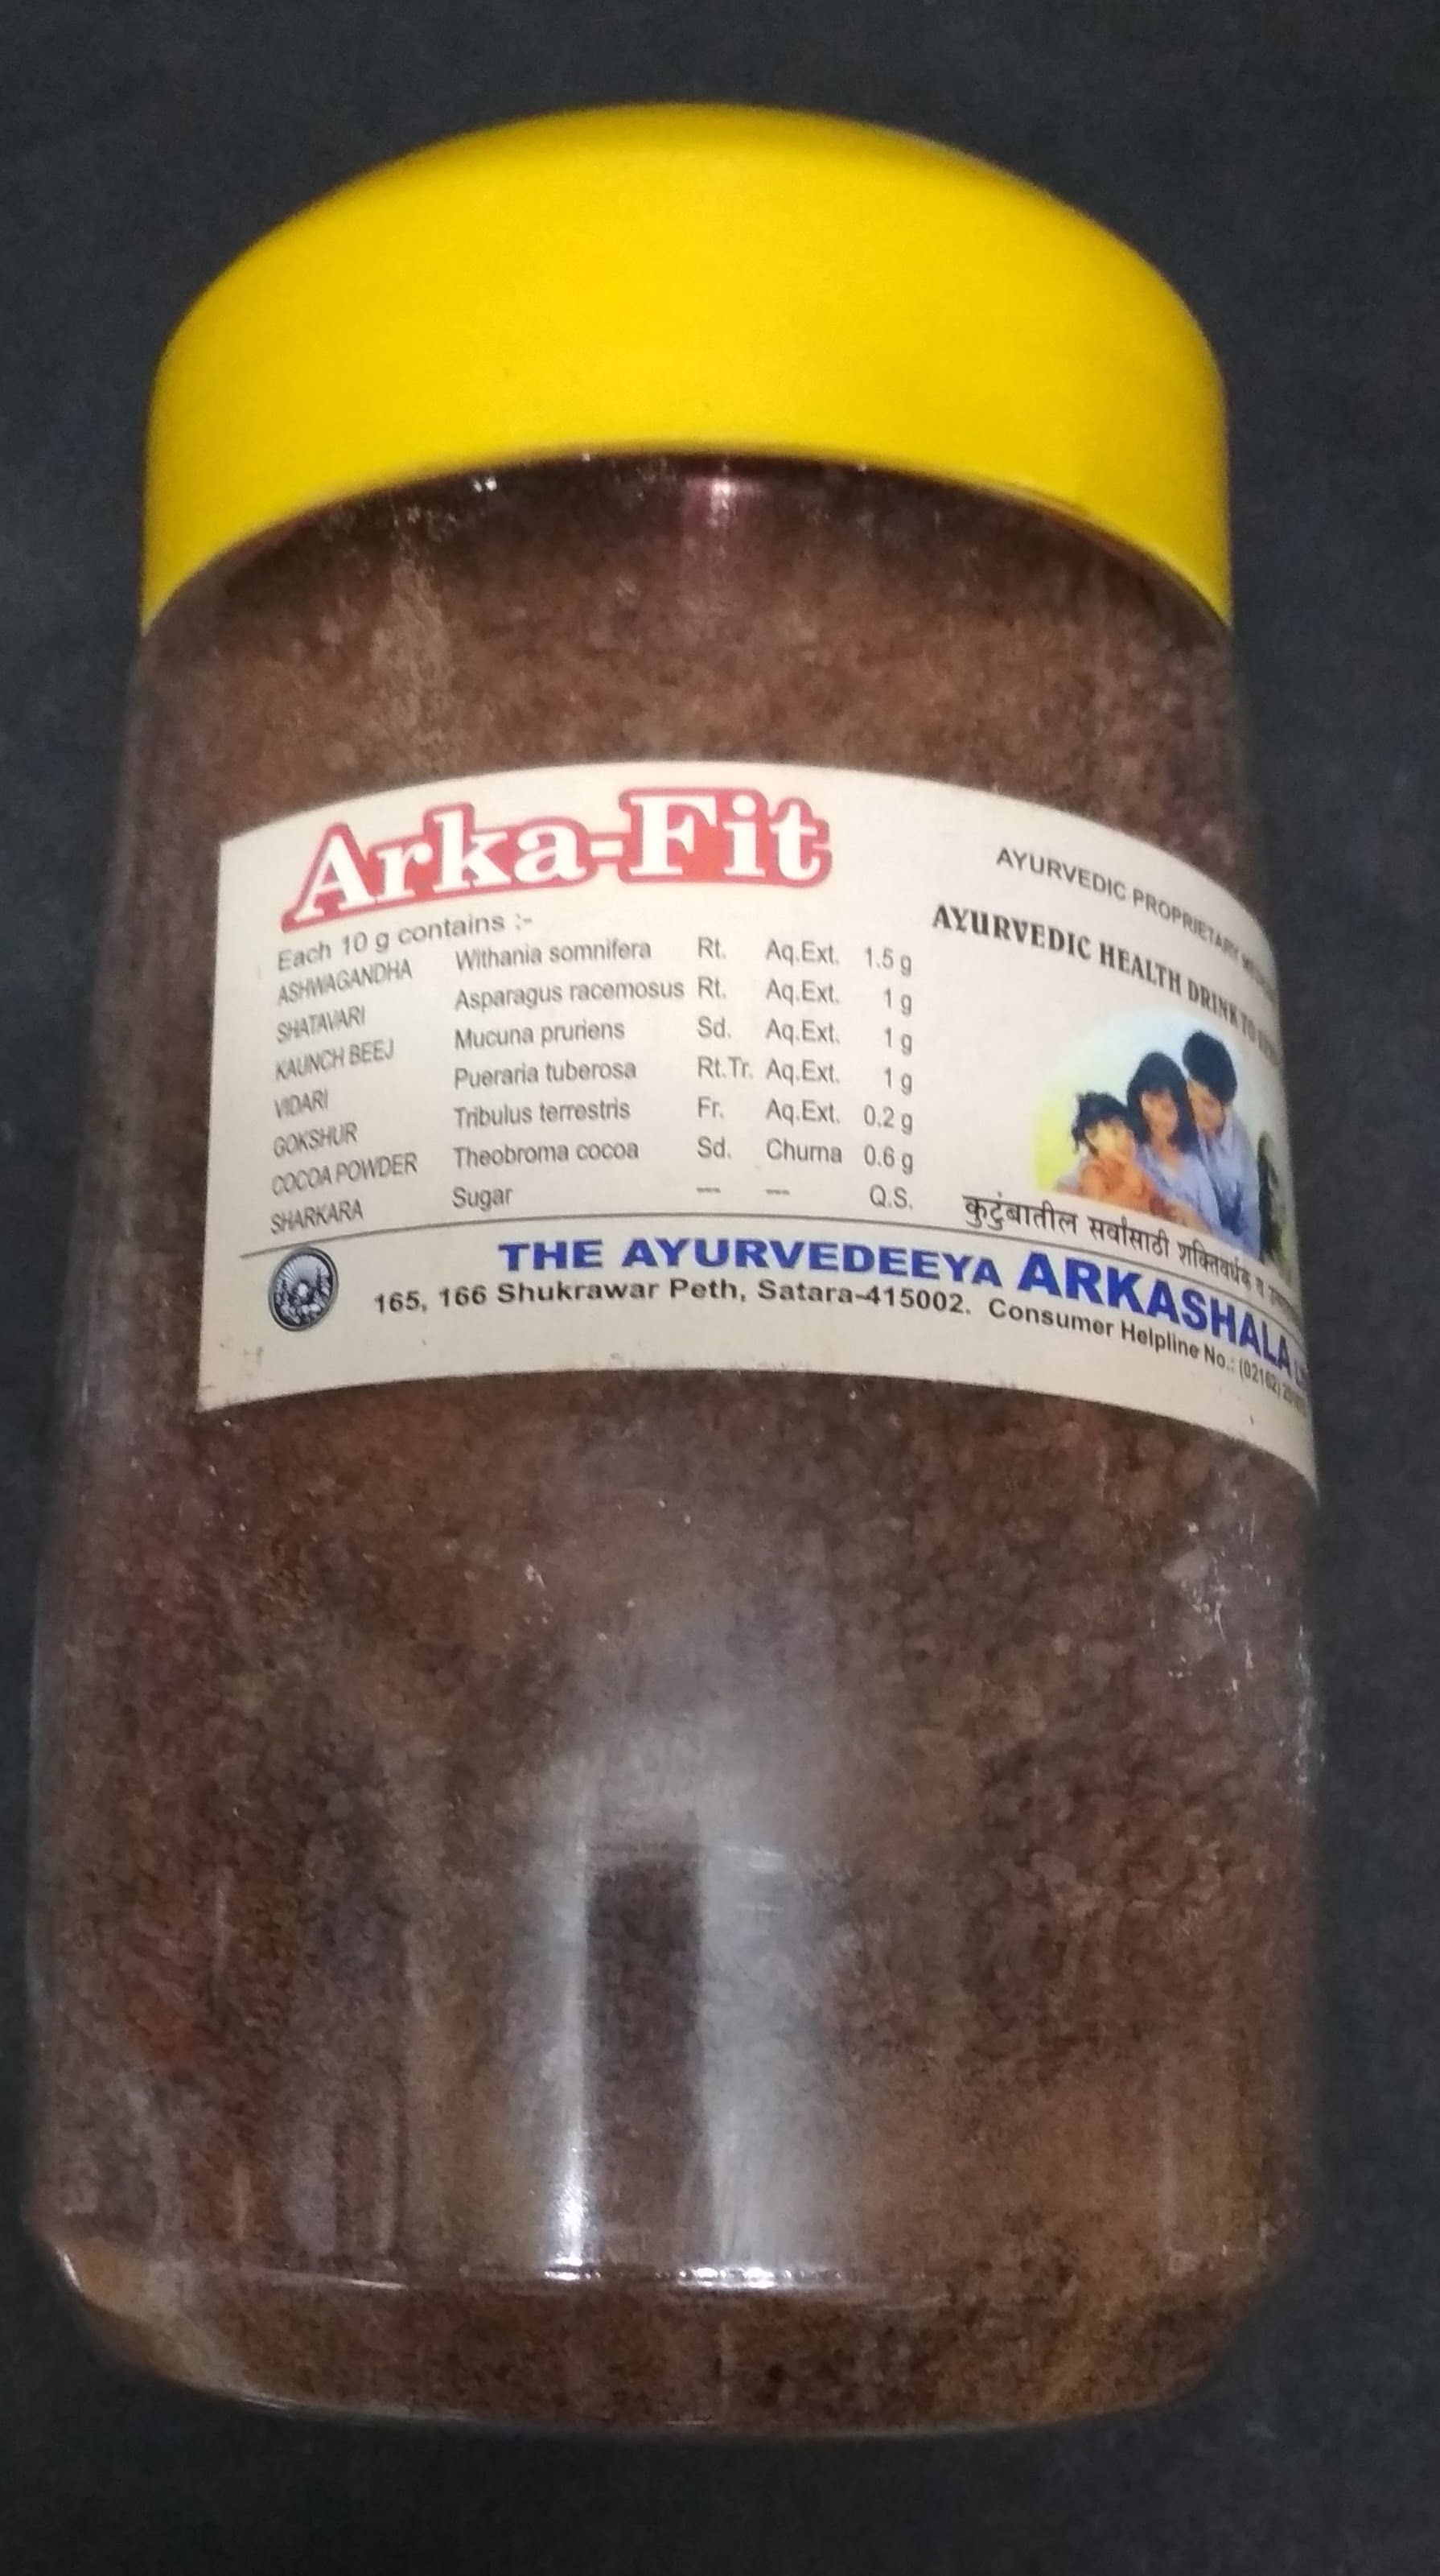 arkafit 500 gm upto 15% off The Ayurveda Arkashala